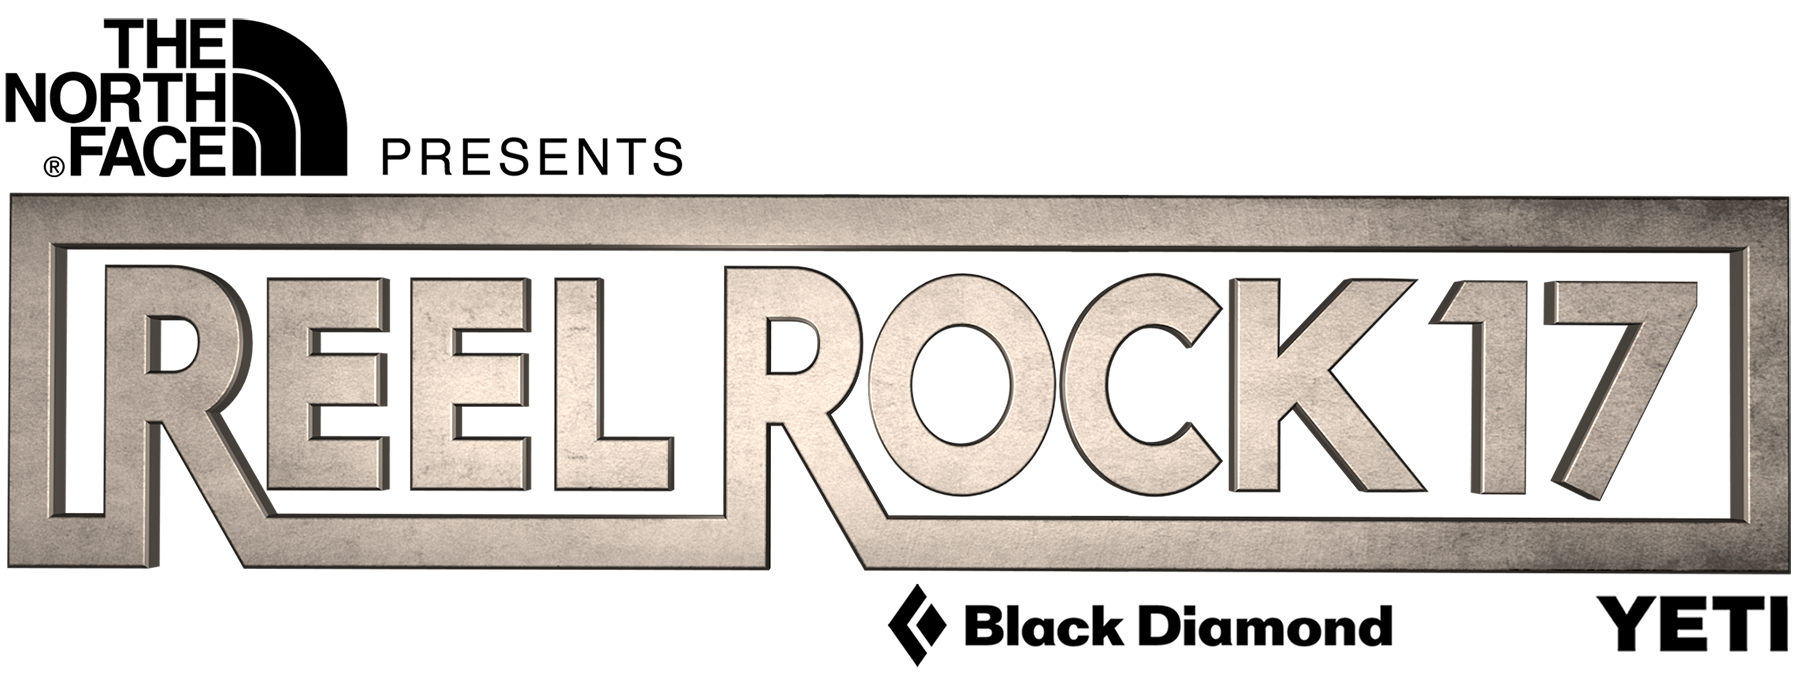 https://vimff.org/wp-content/uploads/2023/03/vimff-reel-rock-17-logo-black-1800x685-1.png